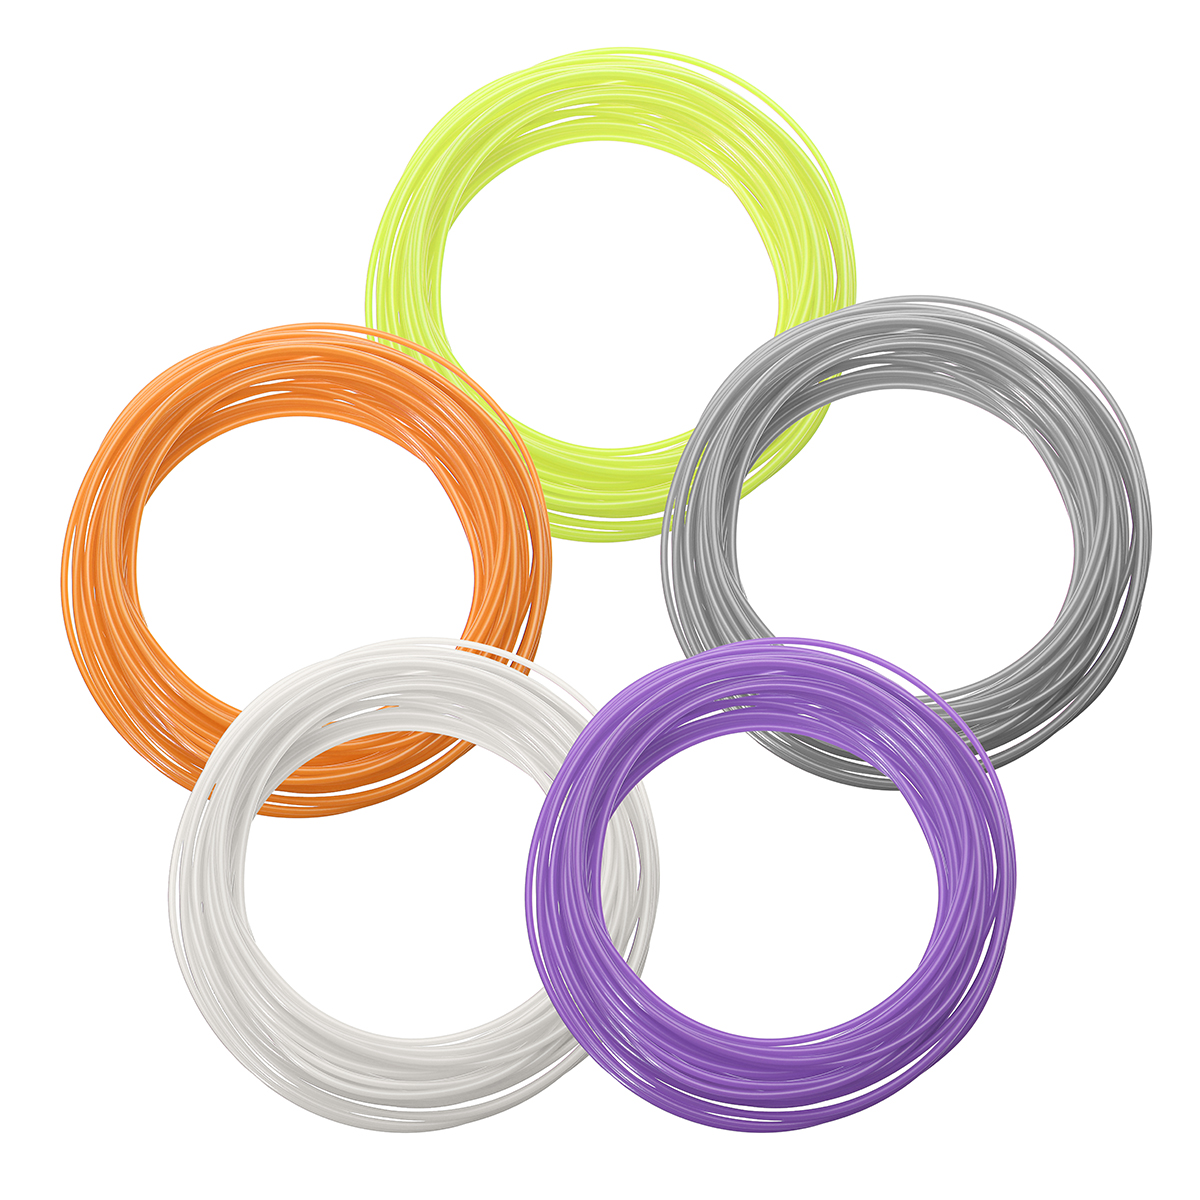 20 Colors/Pack 5/10m Length Per Color PLA 1.75mm Filament for 3D Printing Pen 0.4mm Nozzle 37